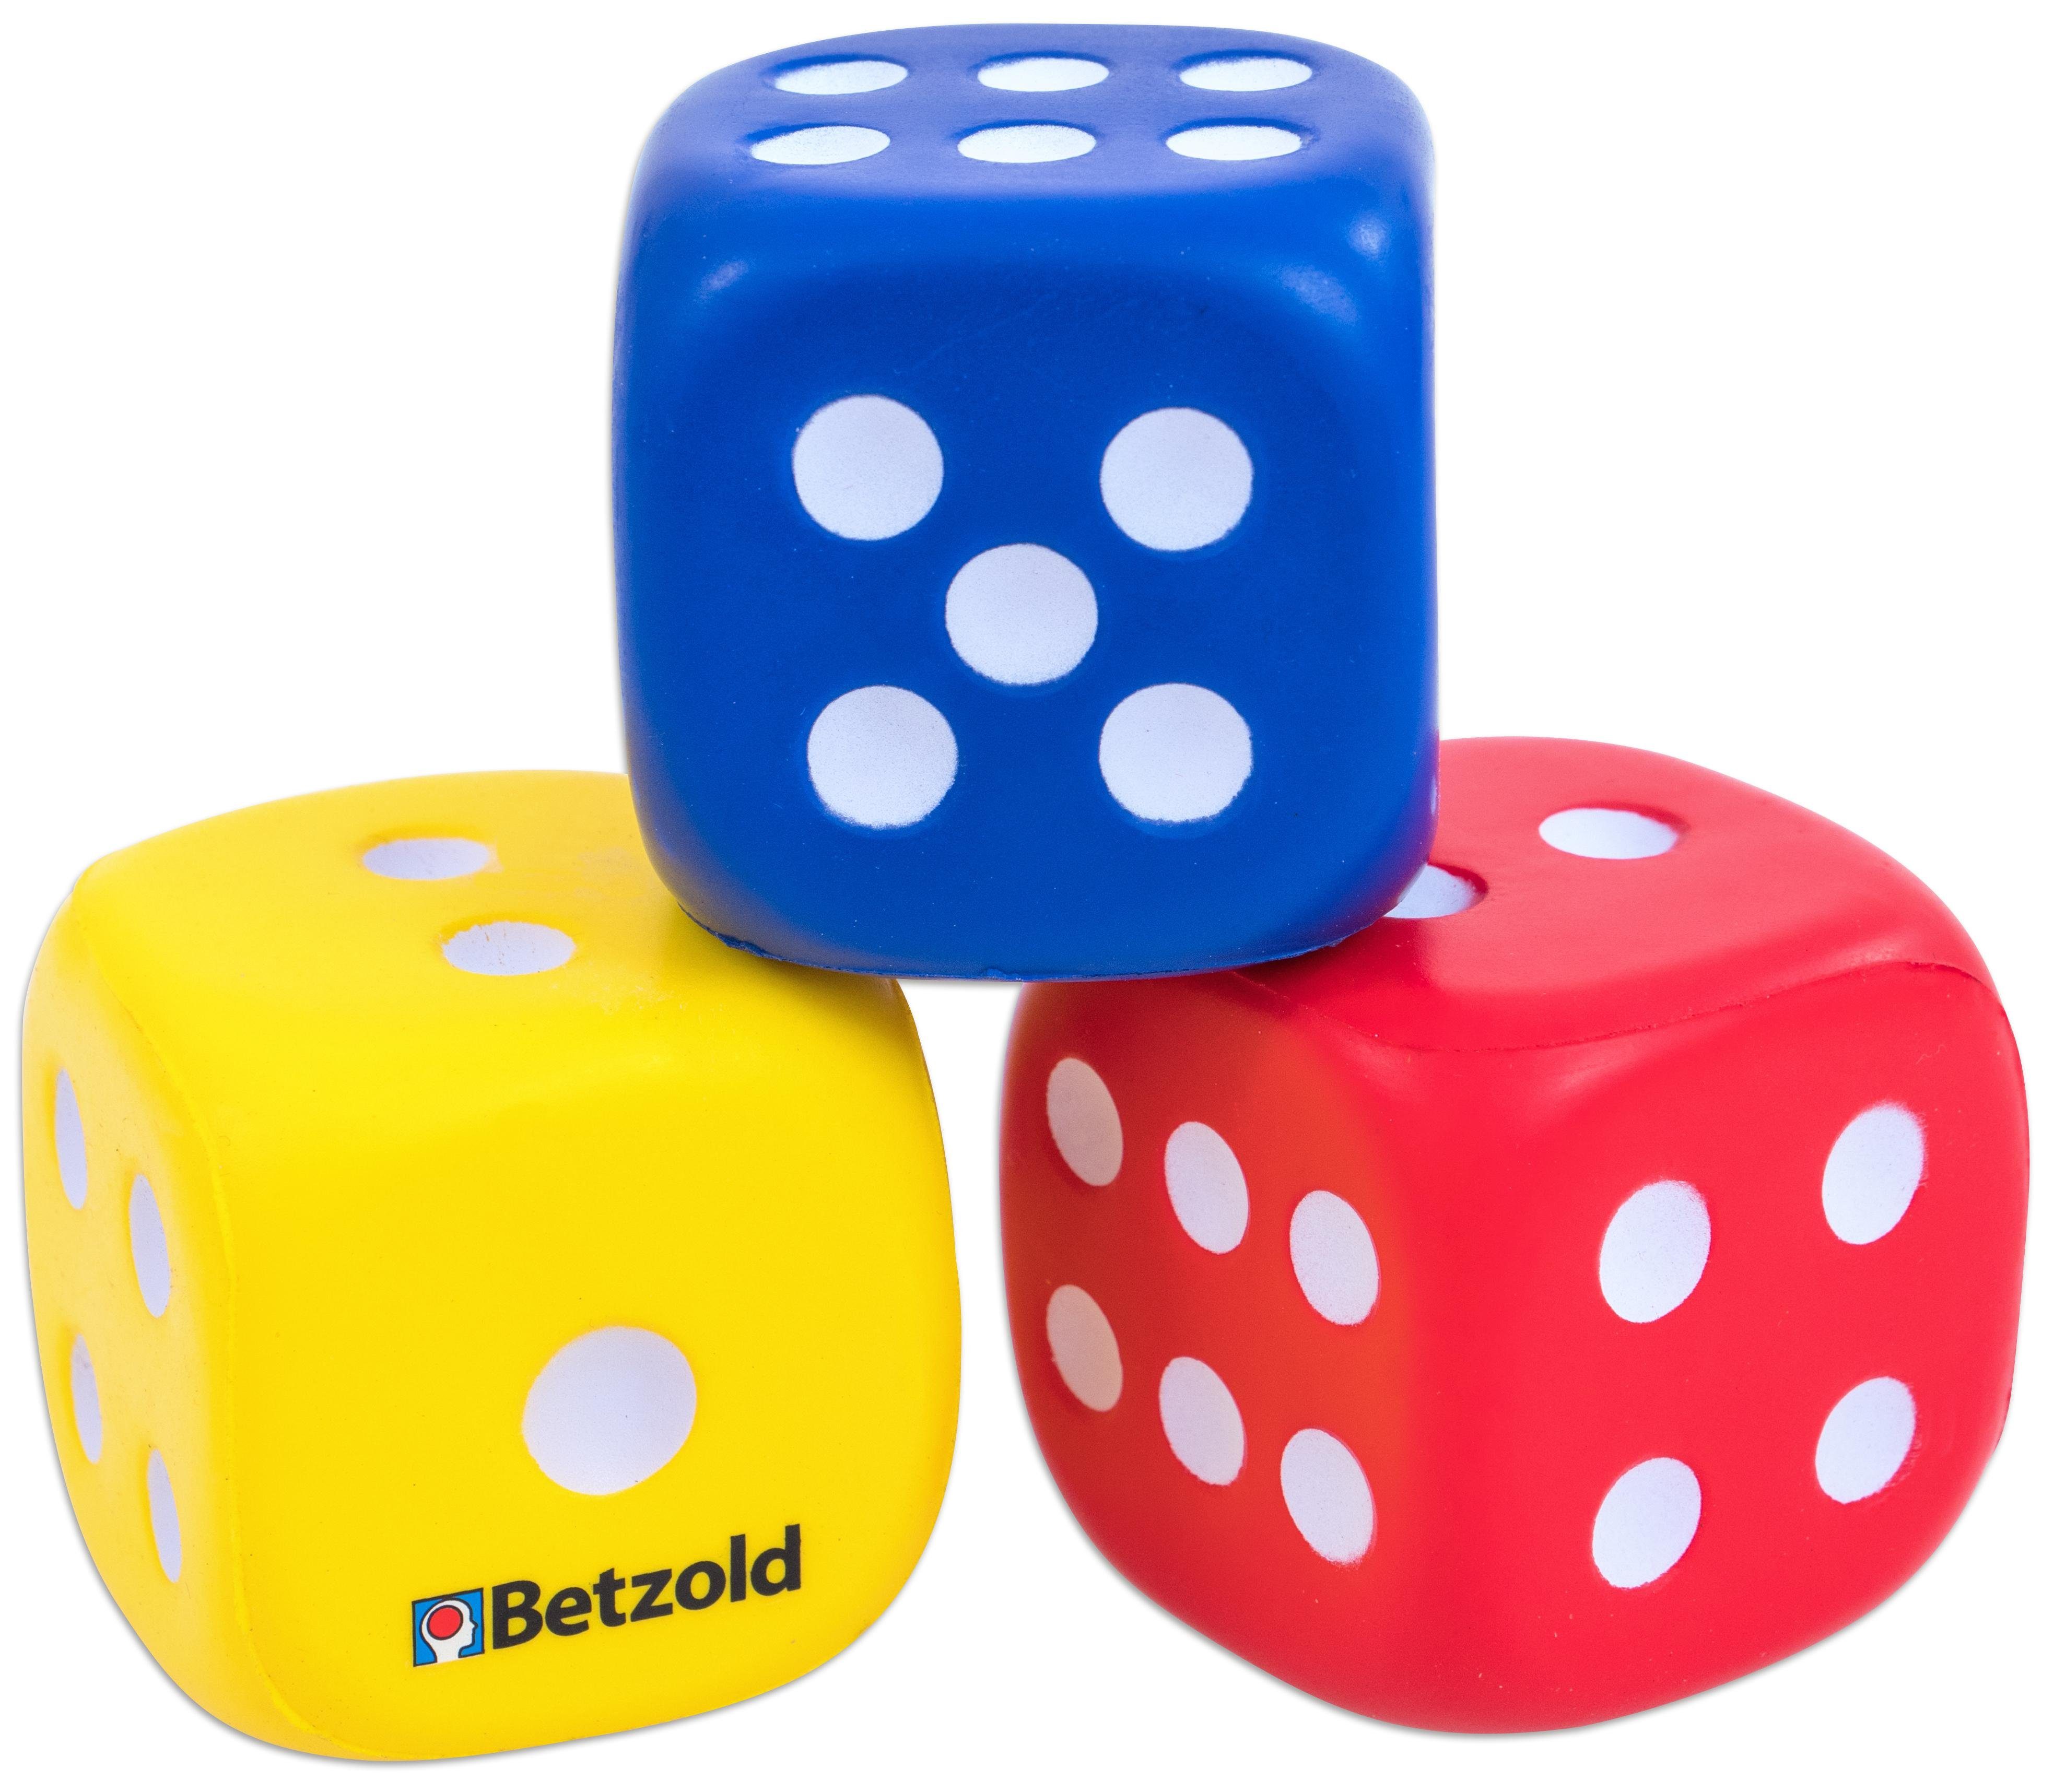 Betzold Lernspielzeug Schaumstoff-Würfel 3 Augenwürfel rot blau gelb - Kinder Soft-Würfel